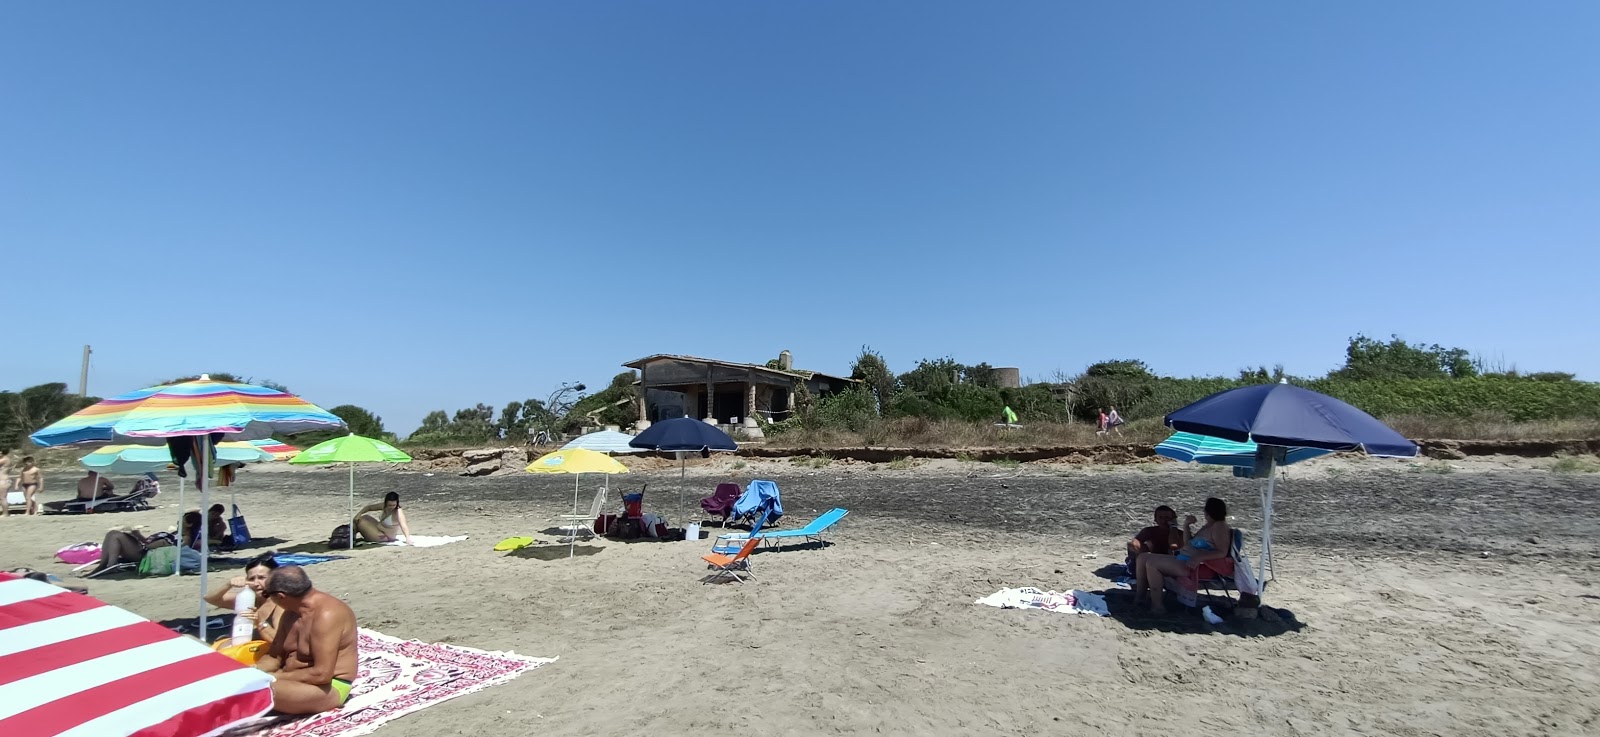 Fotografie cu Spiaggia di Valmontorio cu nivelul de curățenie in medie